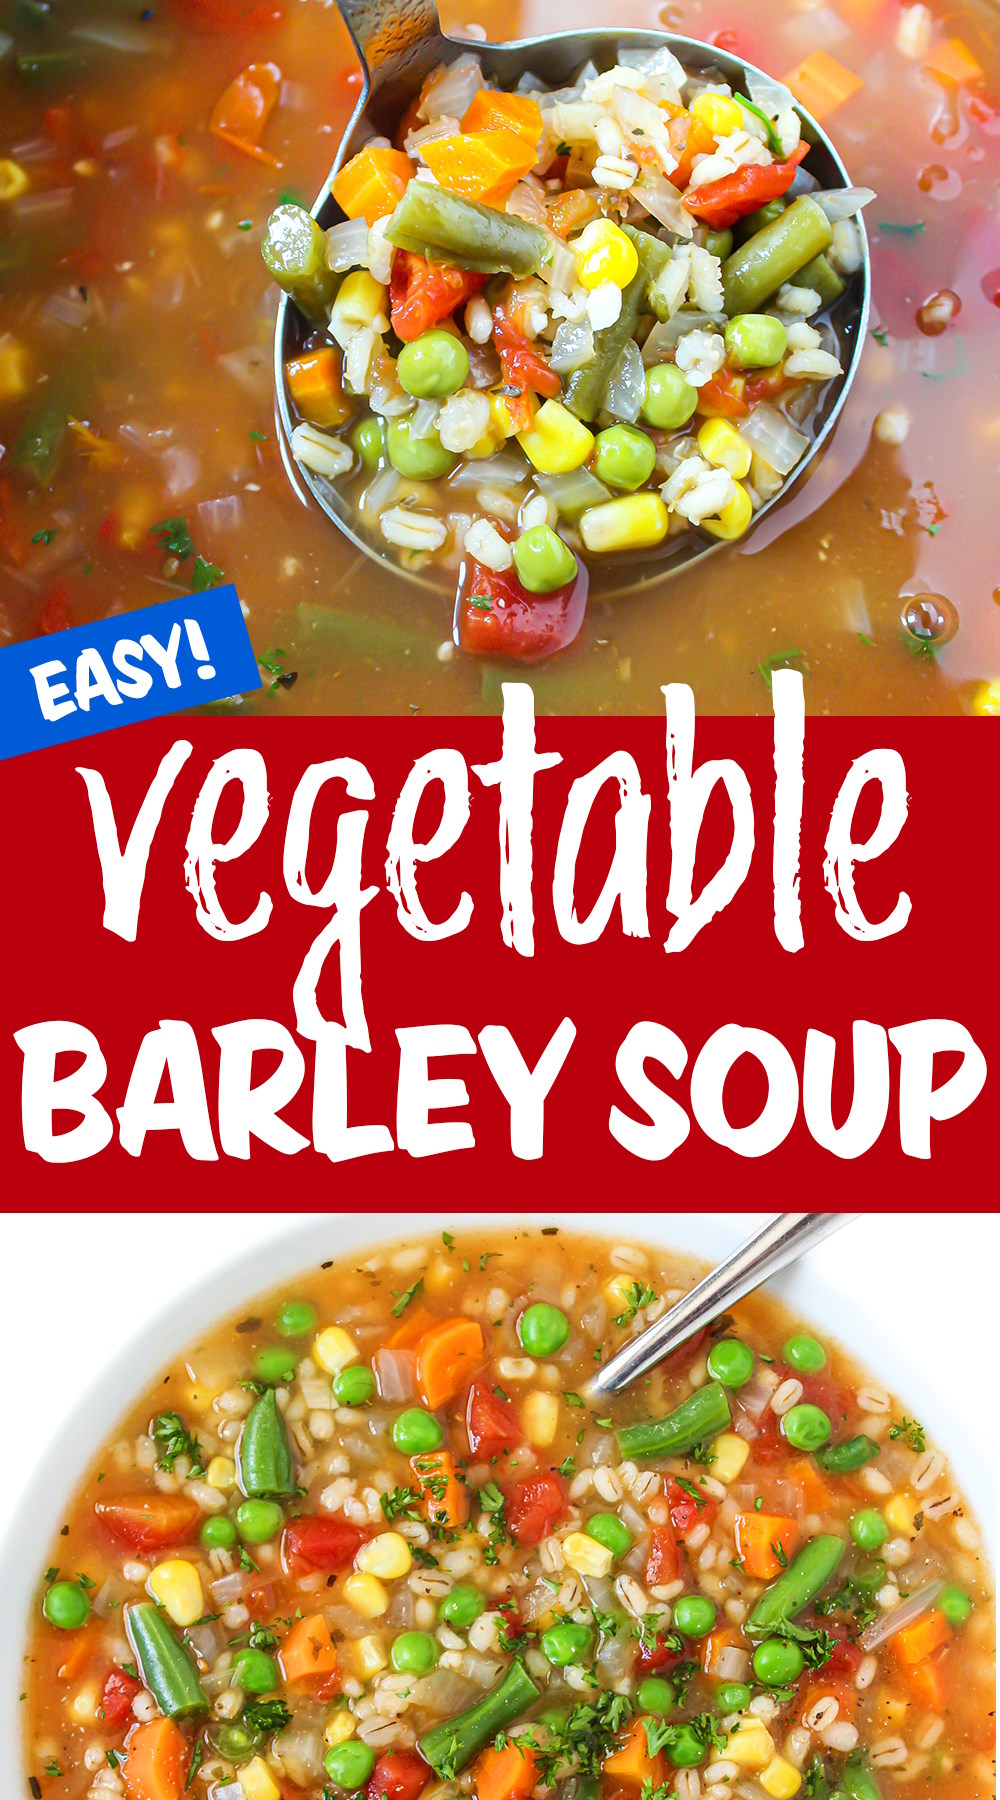 Vegetable Barley Soup (Easy, Vegan!) - The Garden Grazer